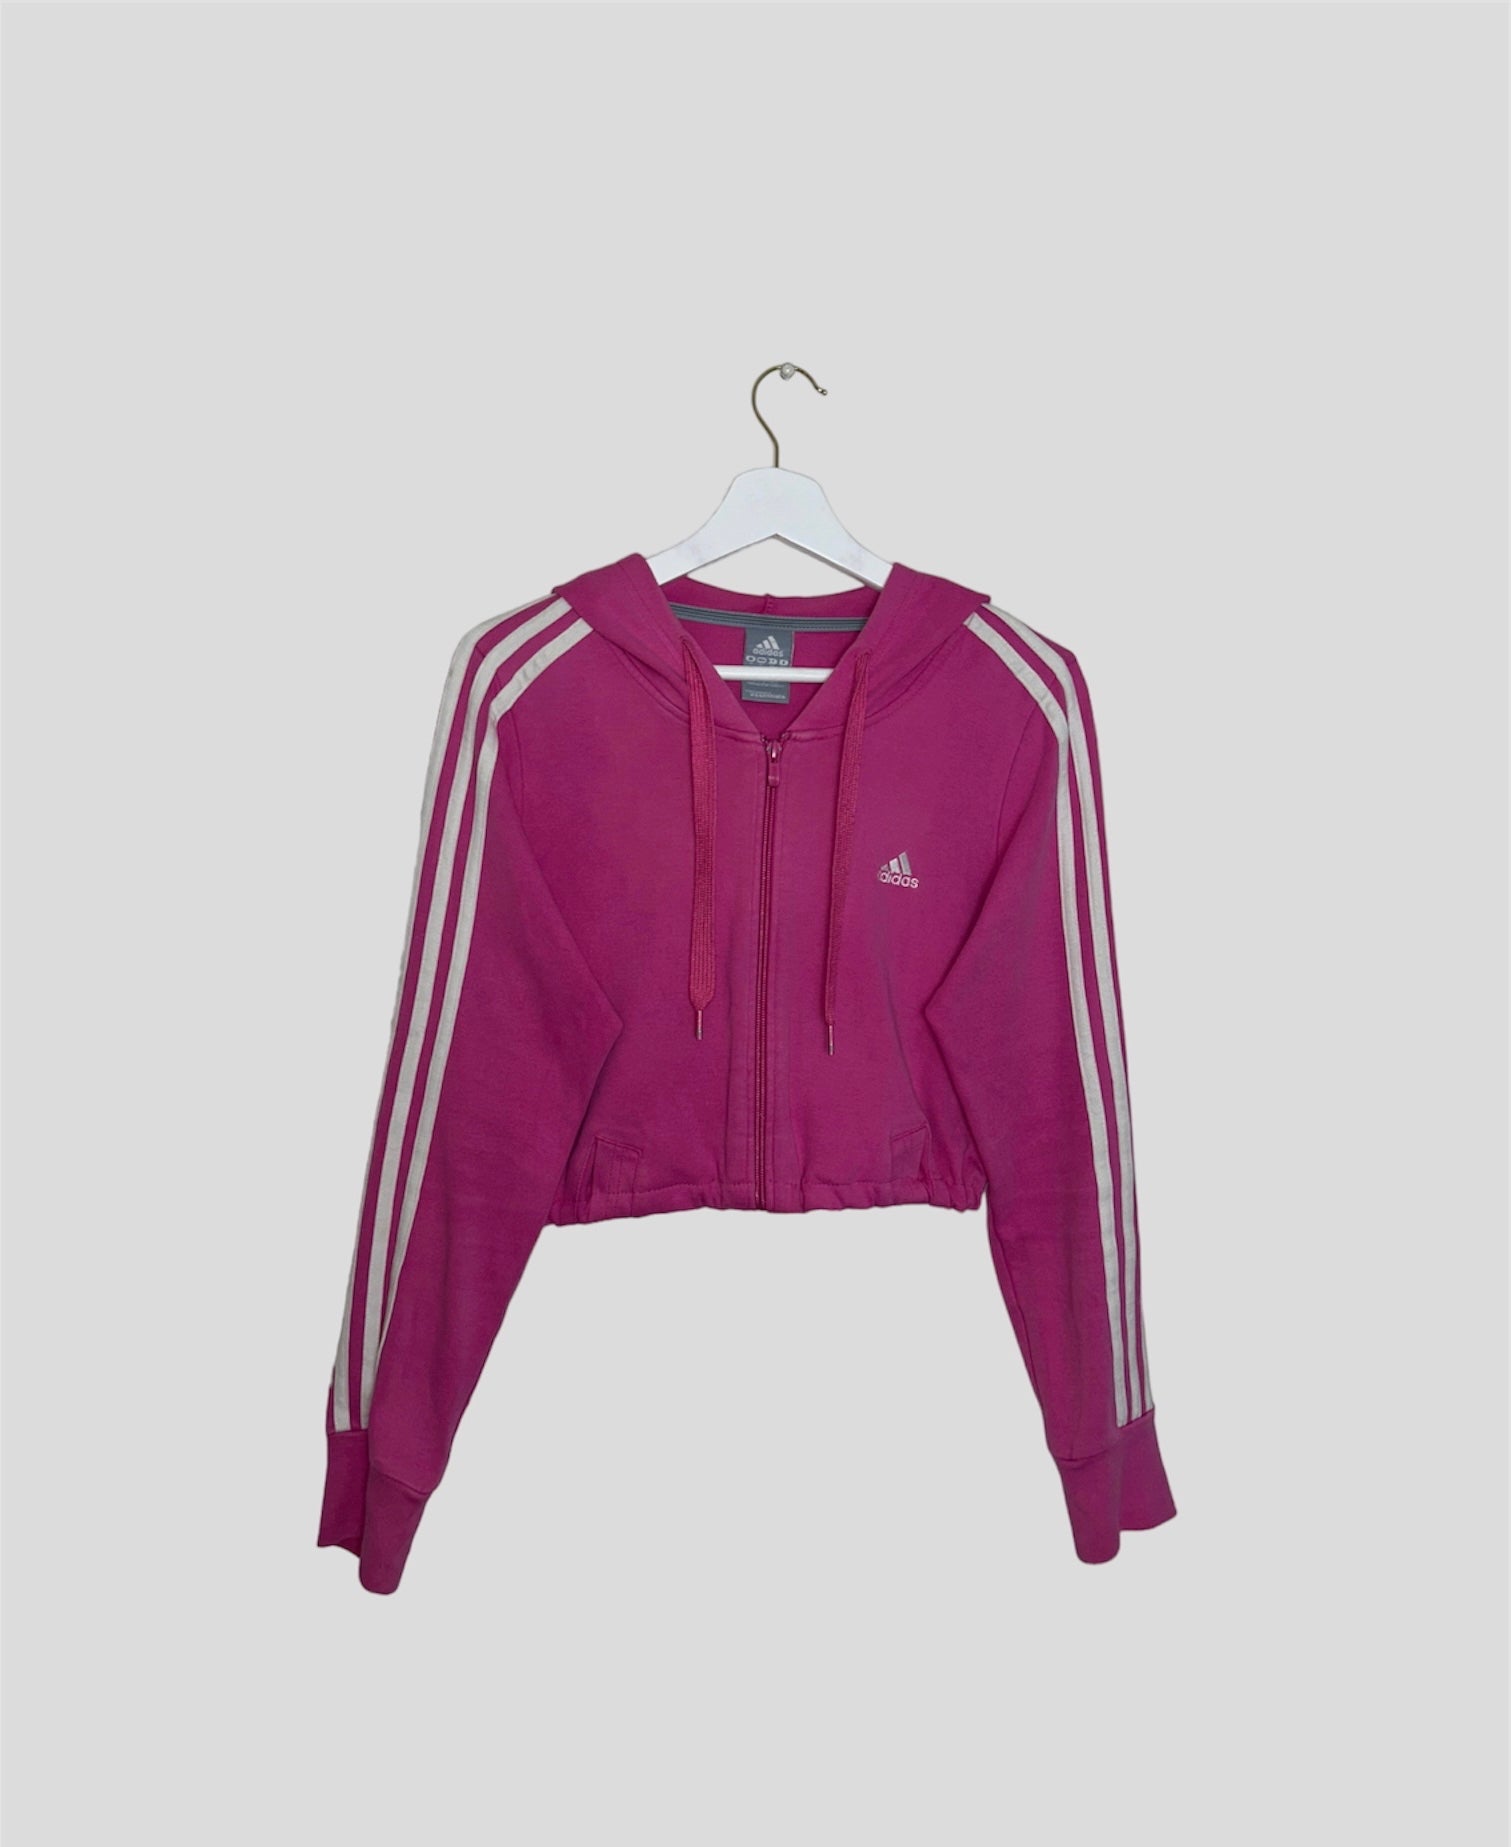 pink zip up hoodie with white adidas logo